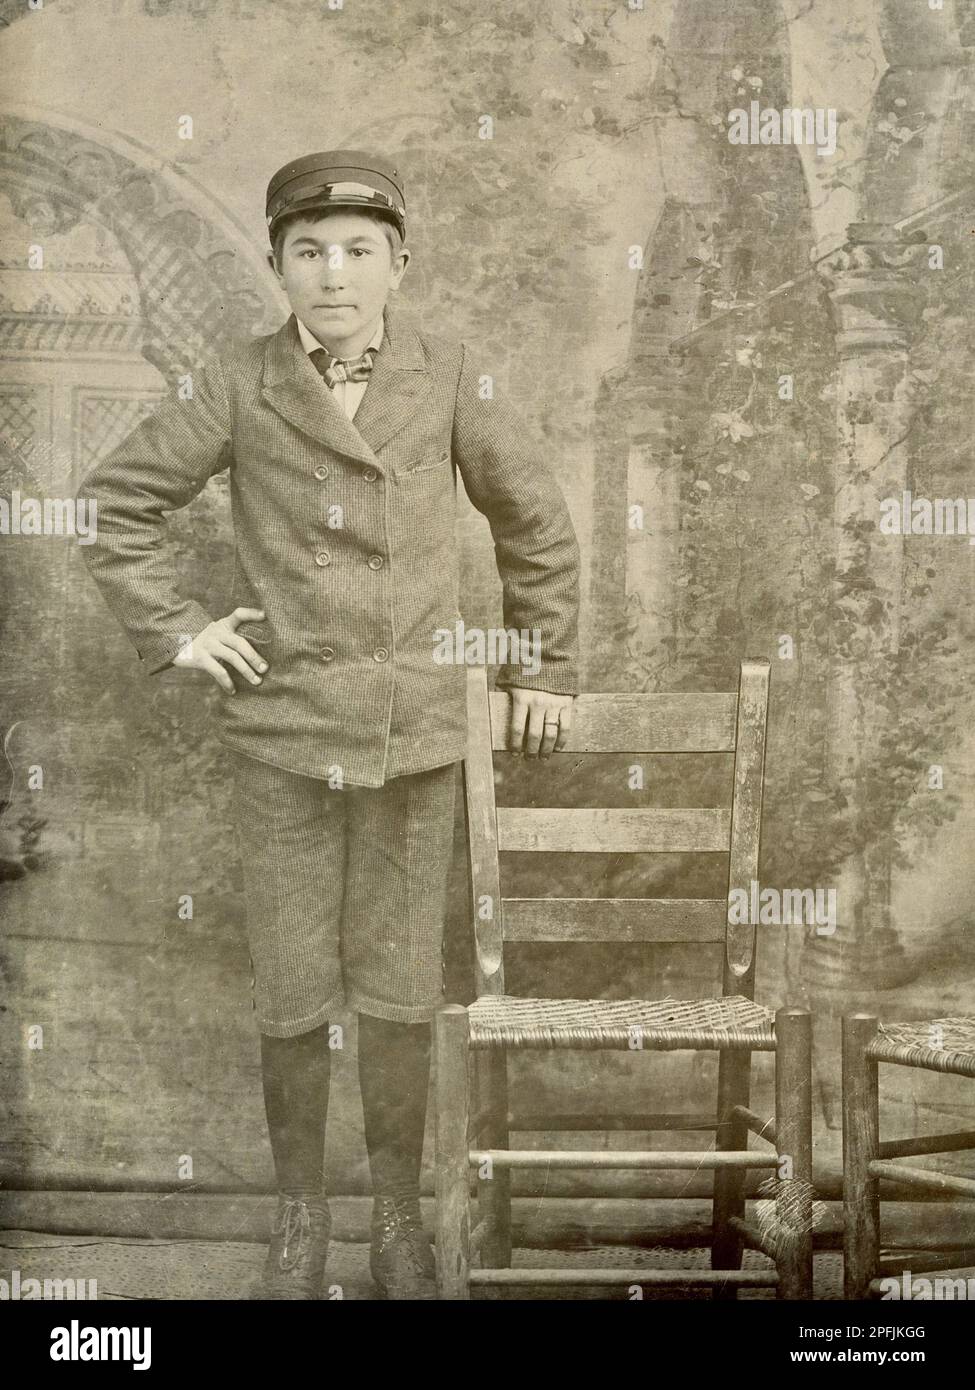 Child Labor 1900.  Child Worker. Boy in Uniform, Possibly a Messenger, Bell Hop, Baggage Handler, Porter Stock Photo